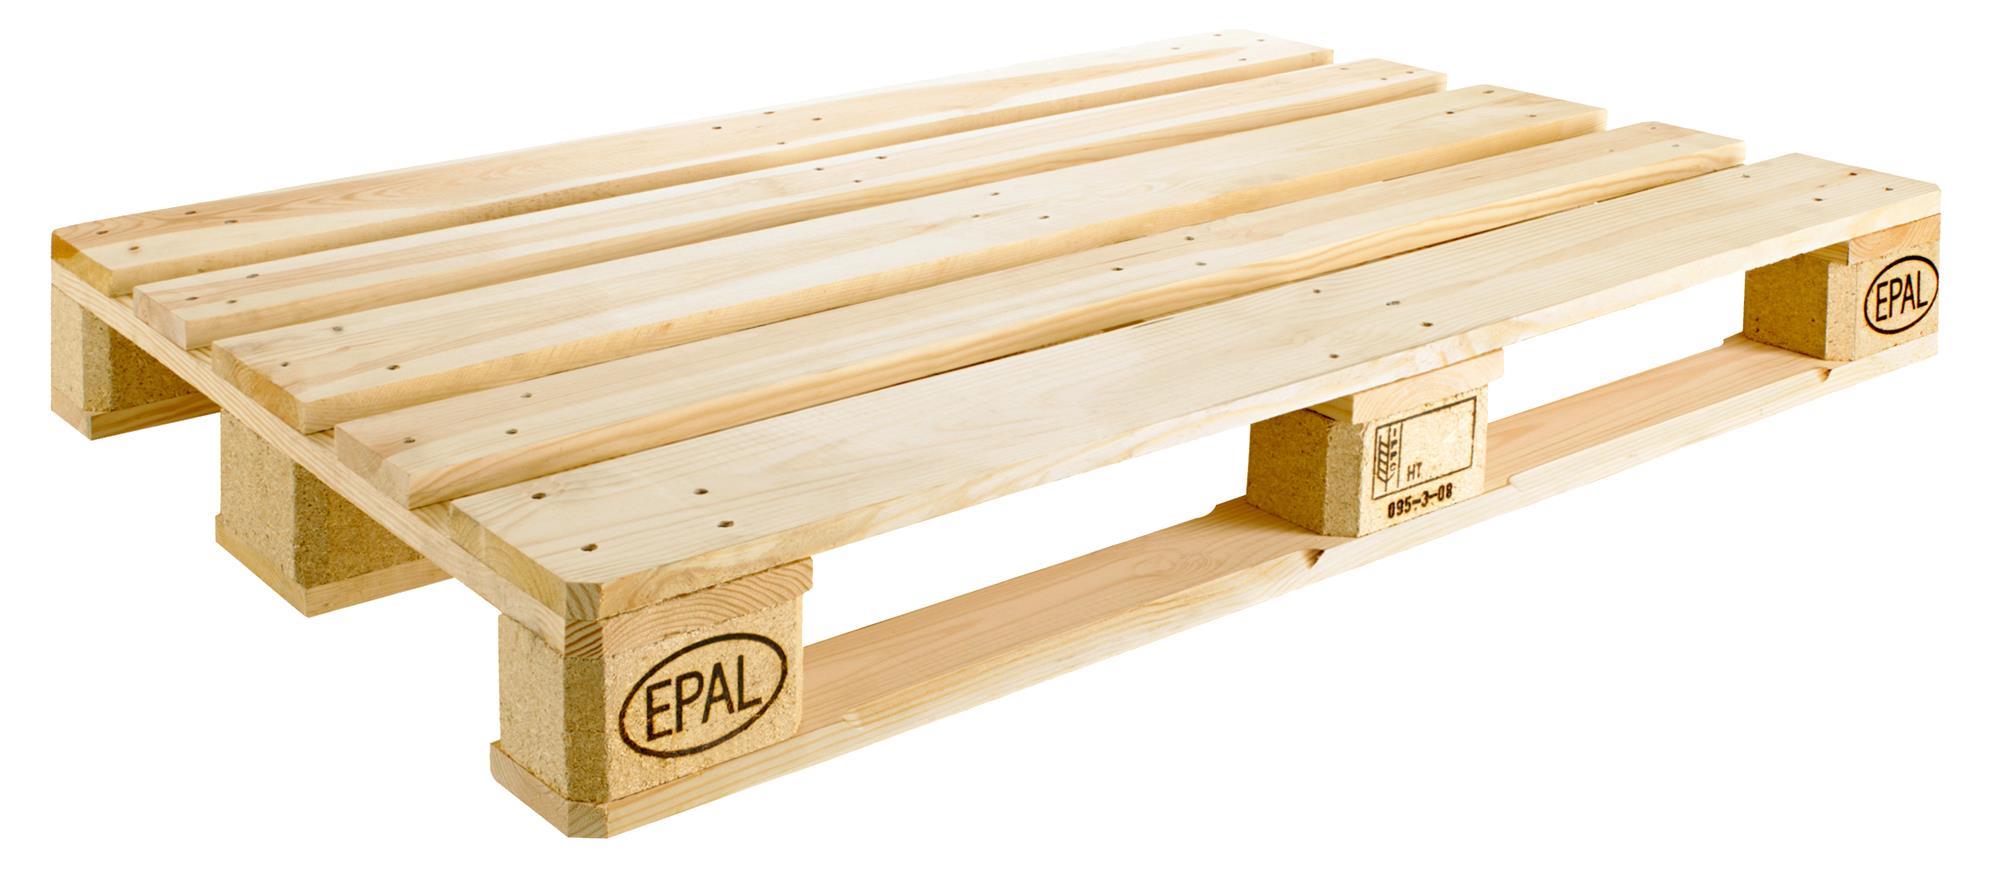 EPAL Europalette - Produkte